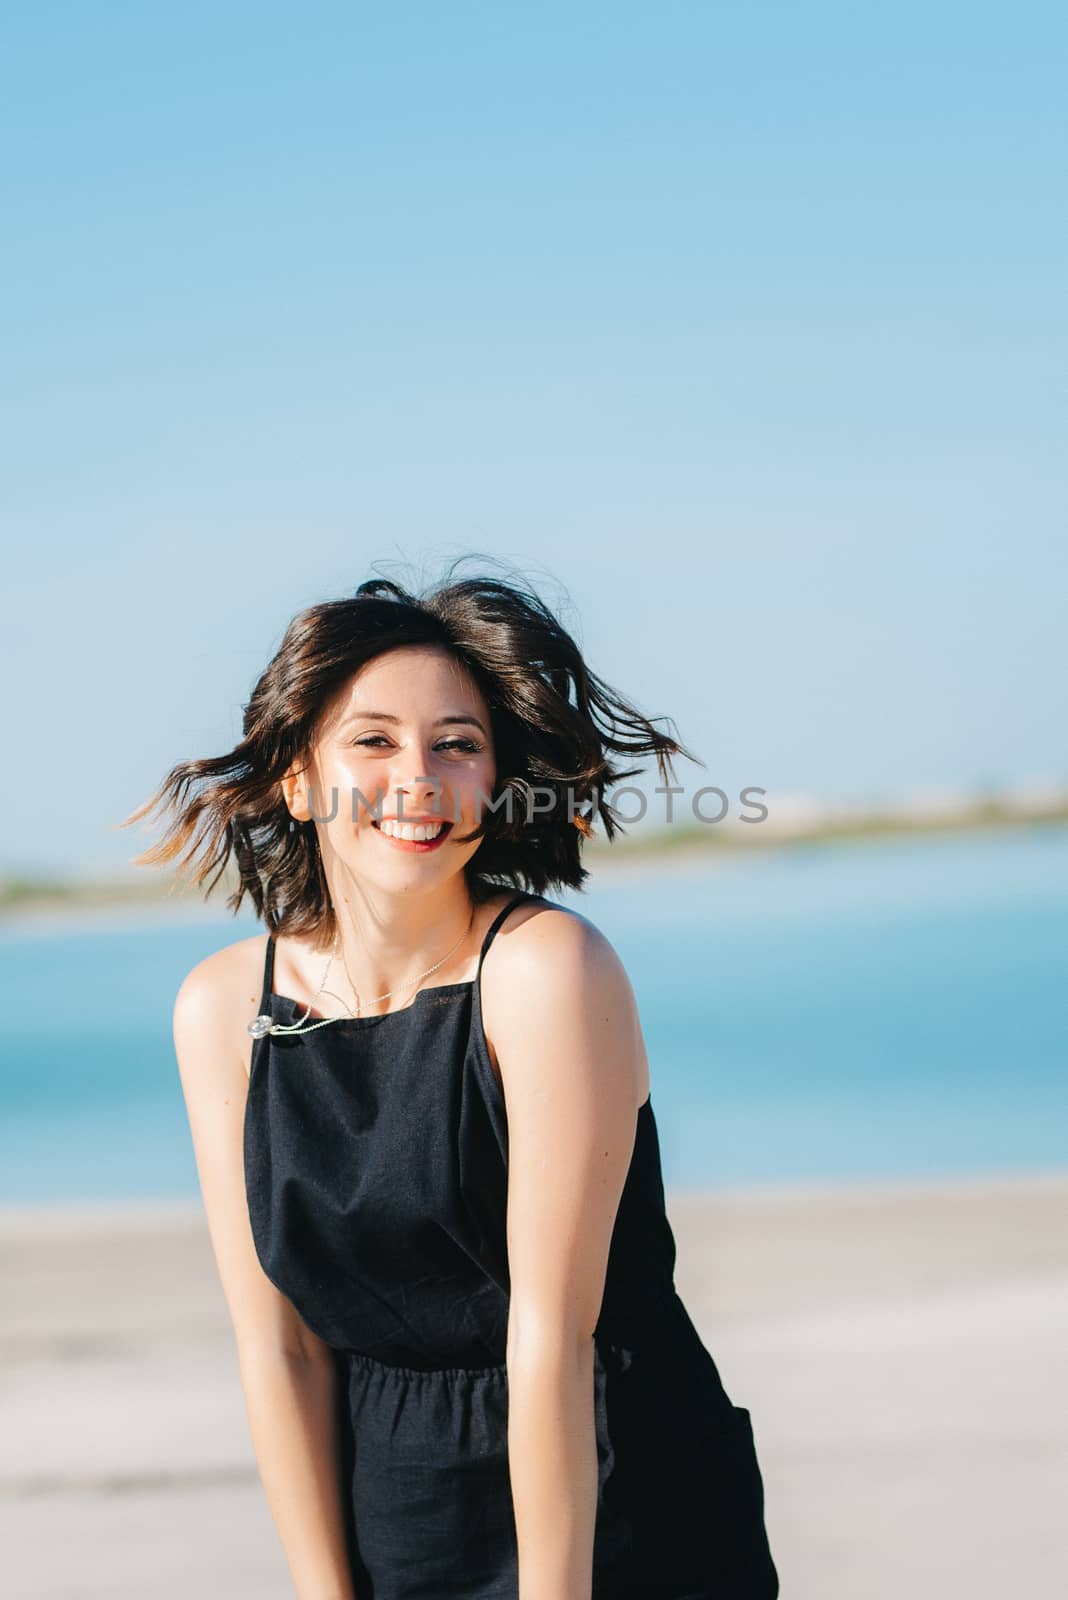 joyous happy girl in a black dress loudly by Andreua